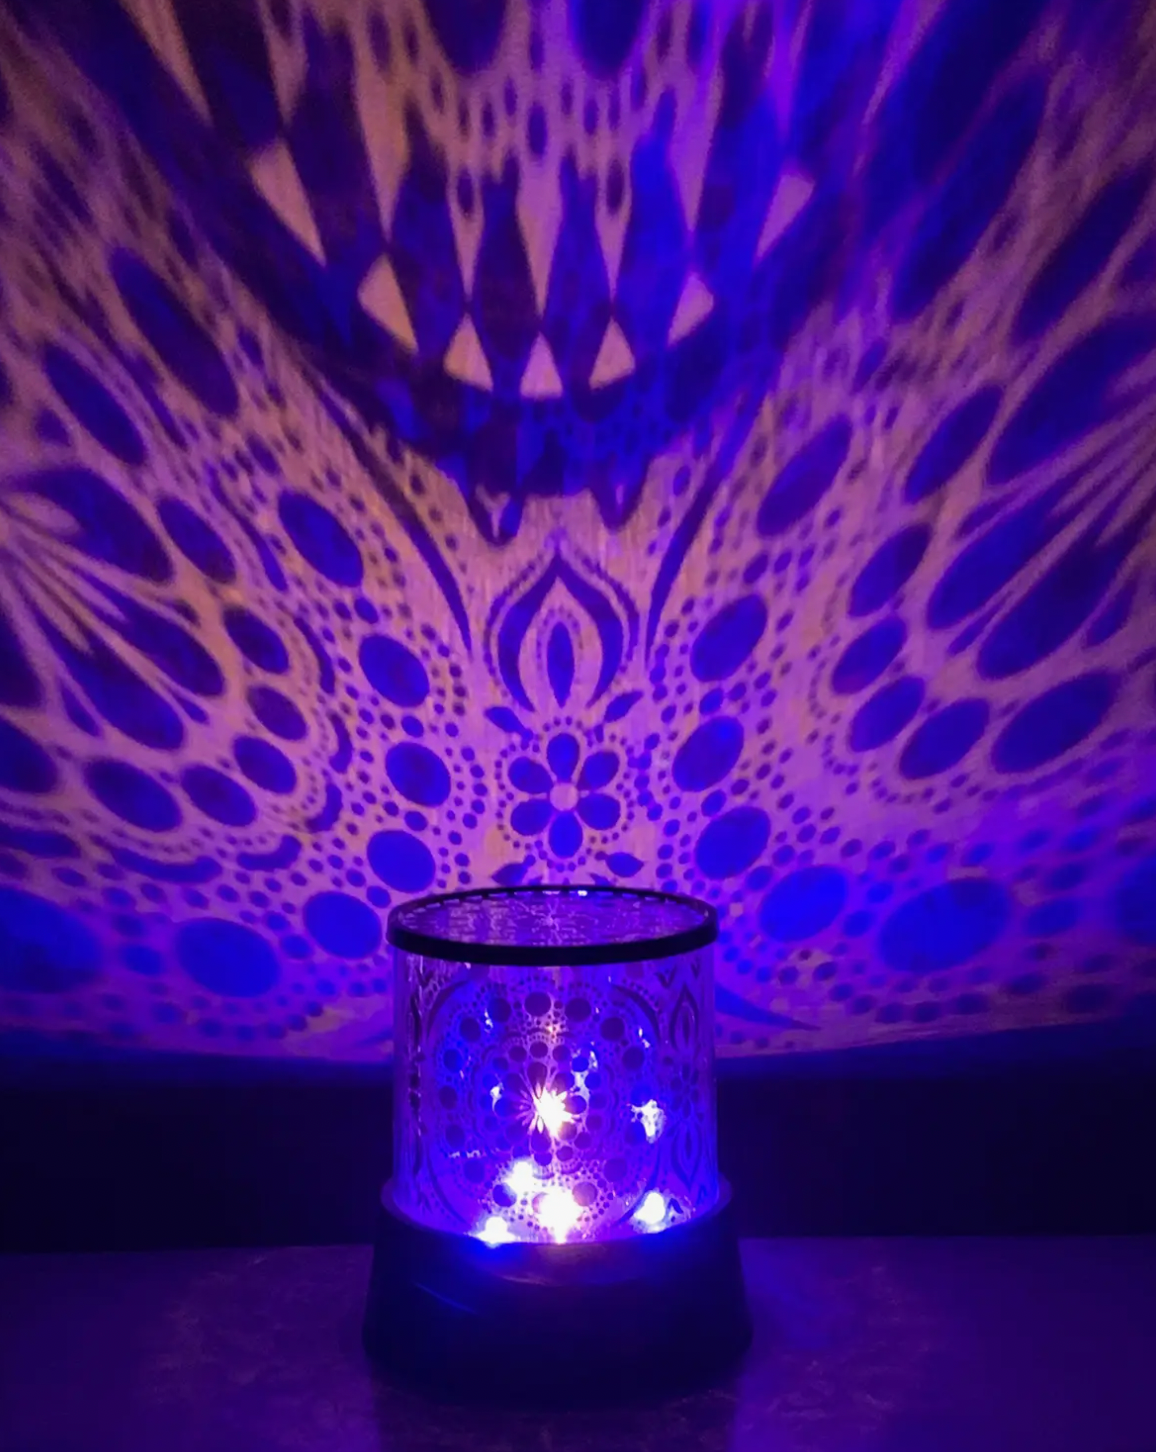 Mandala LED Projection Light